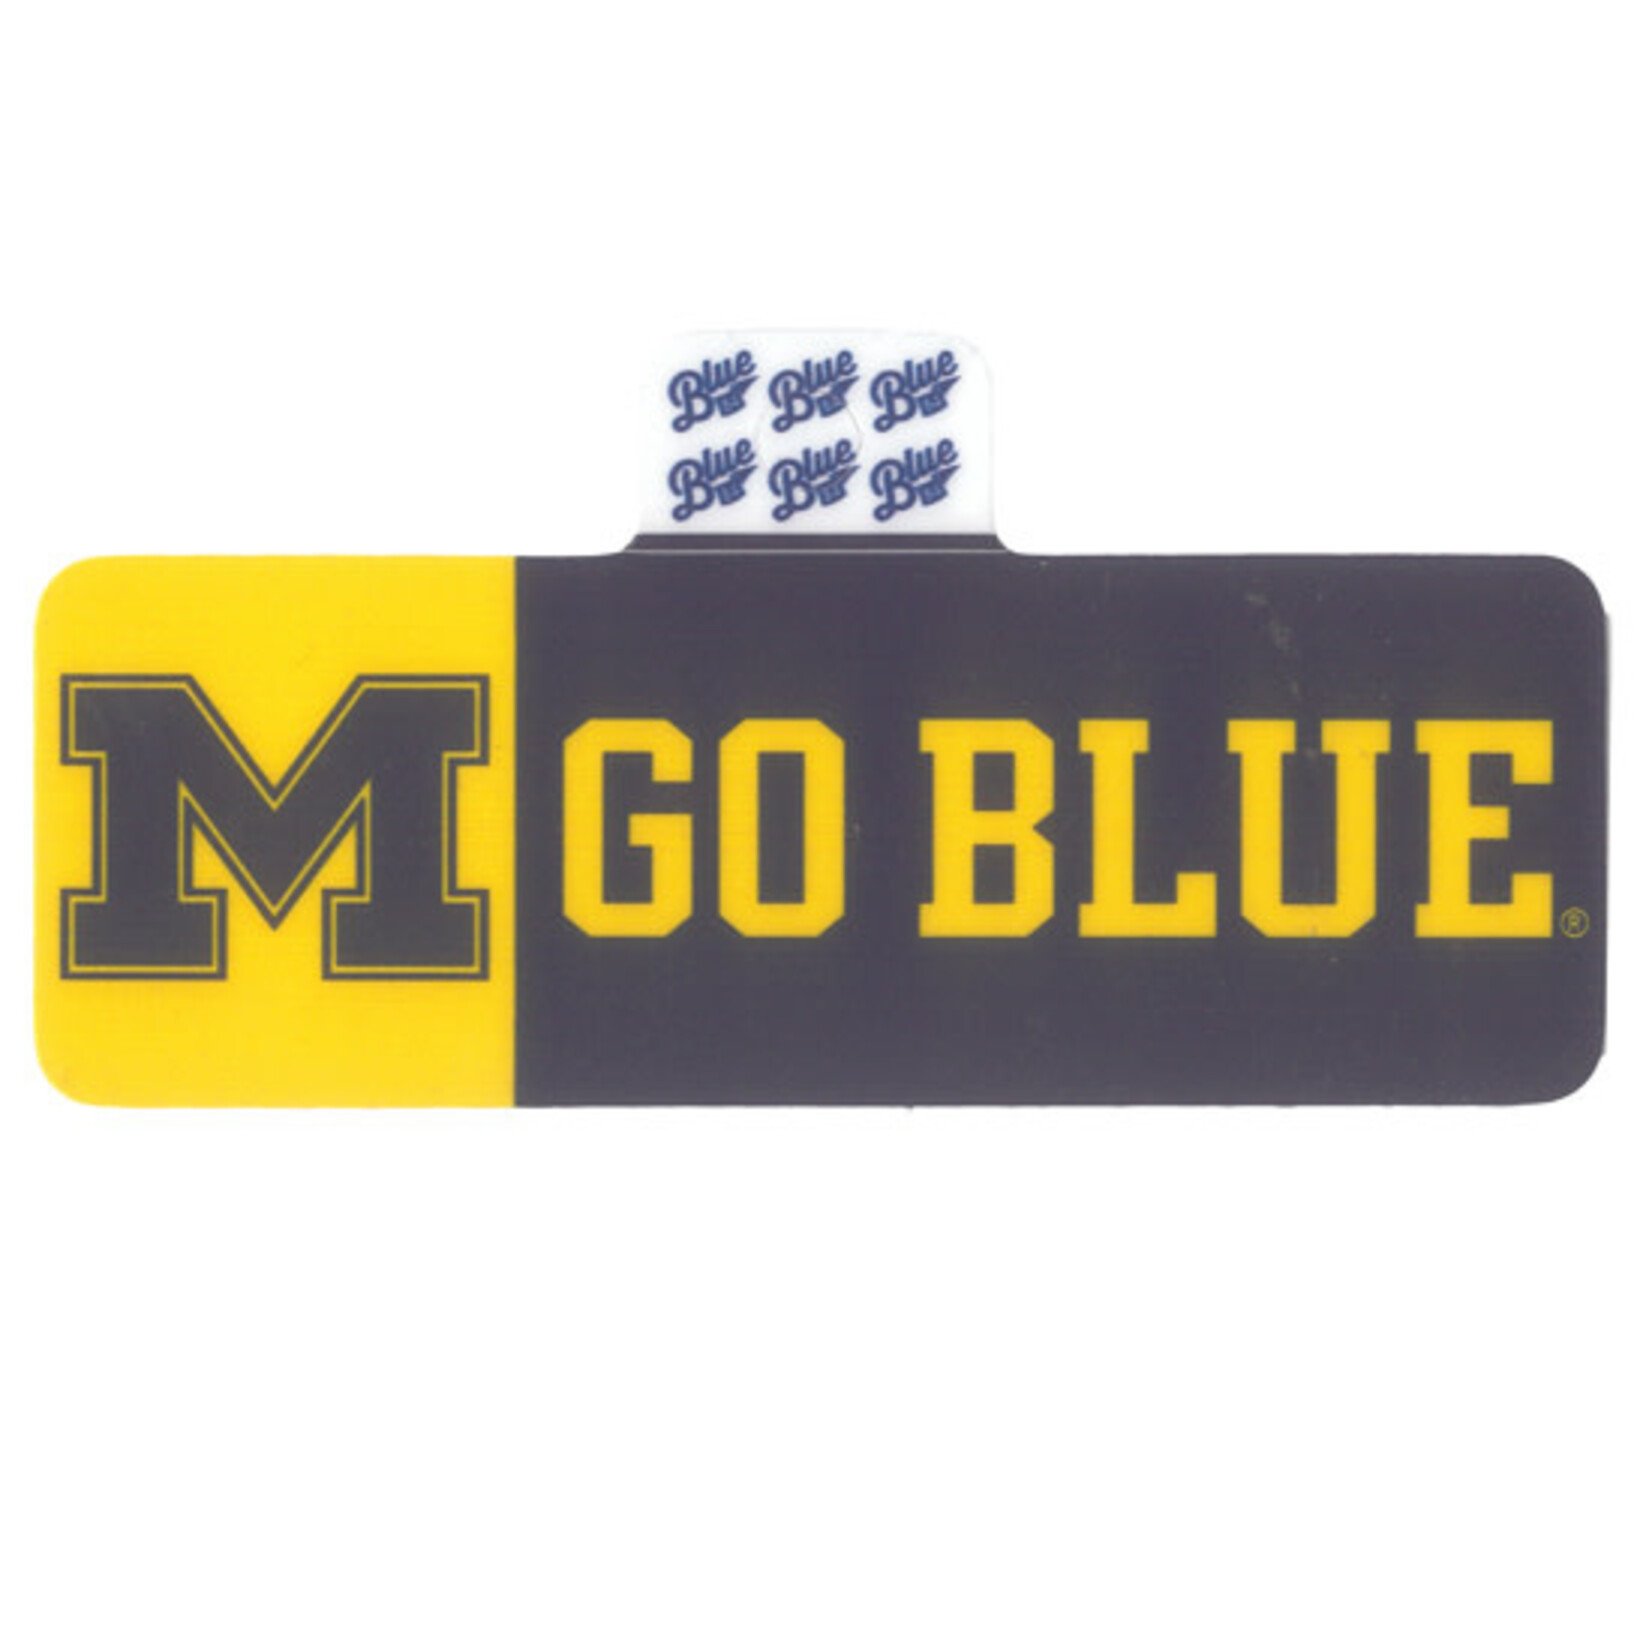 Blue 84 University of Michigan M GO BLUE Billboard Decal